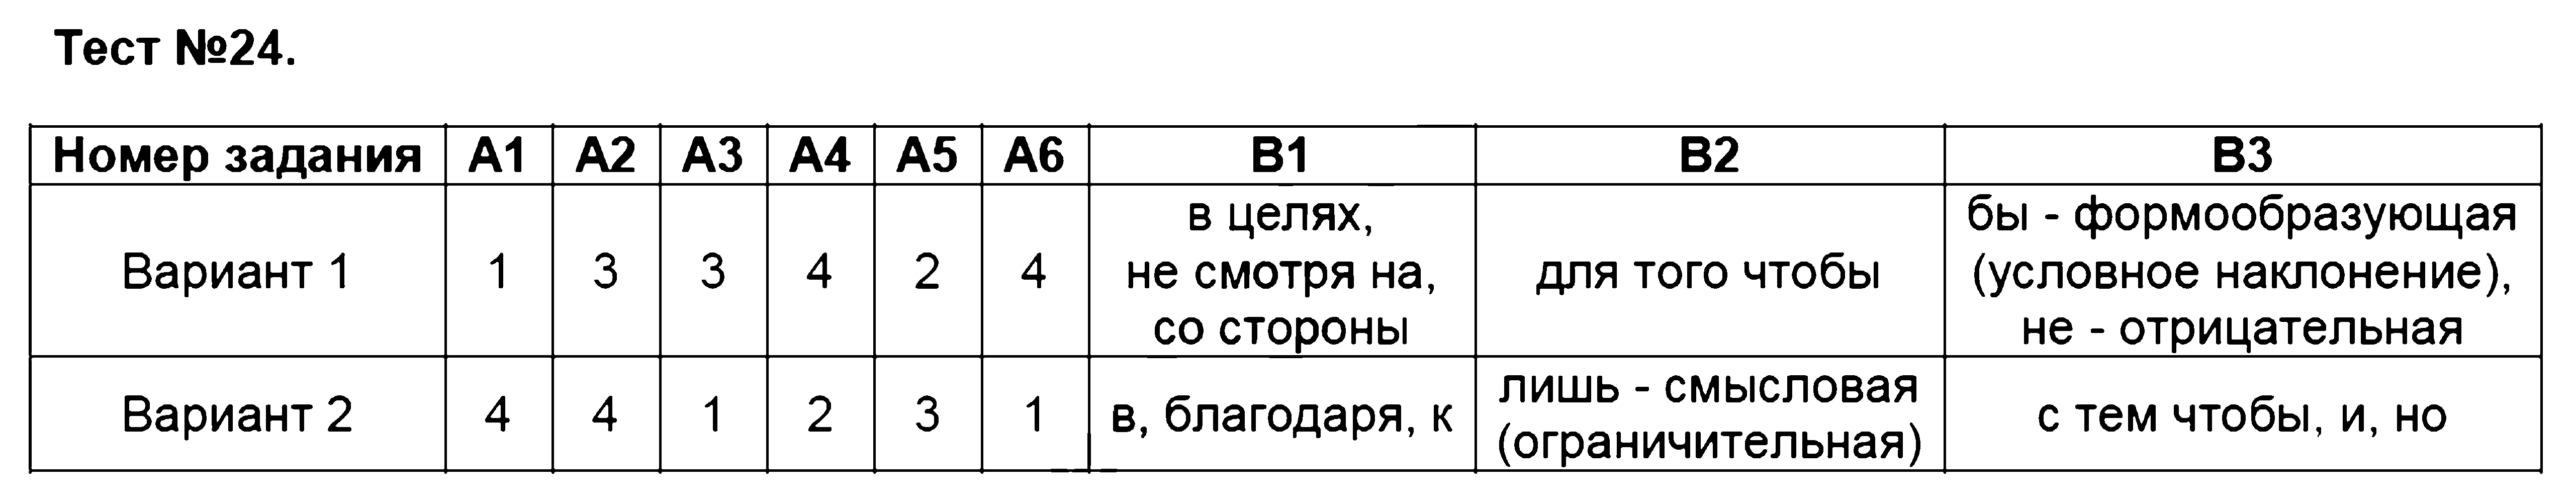 ГДЗ Русский язык 7 класс - Тест 24